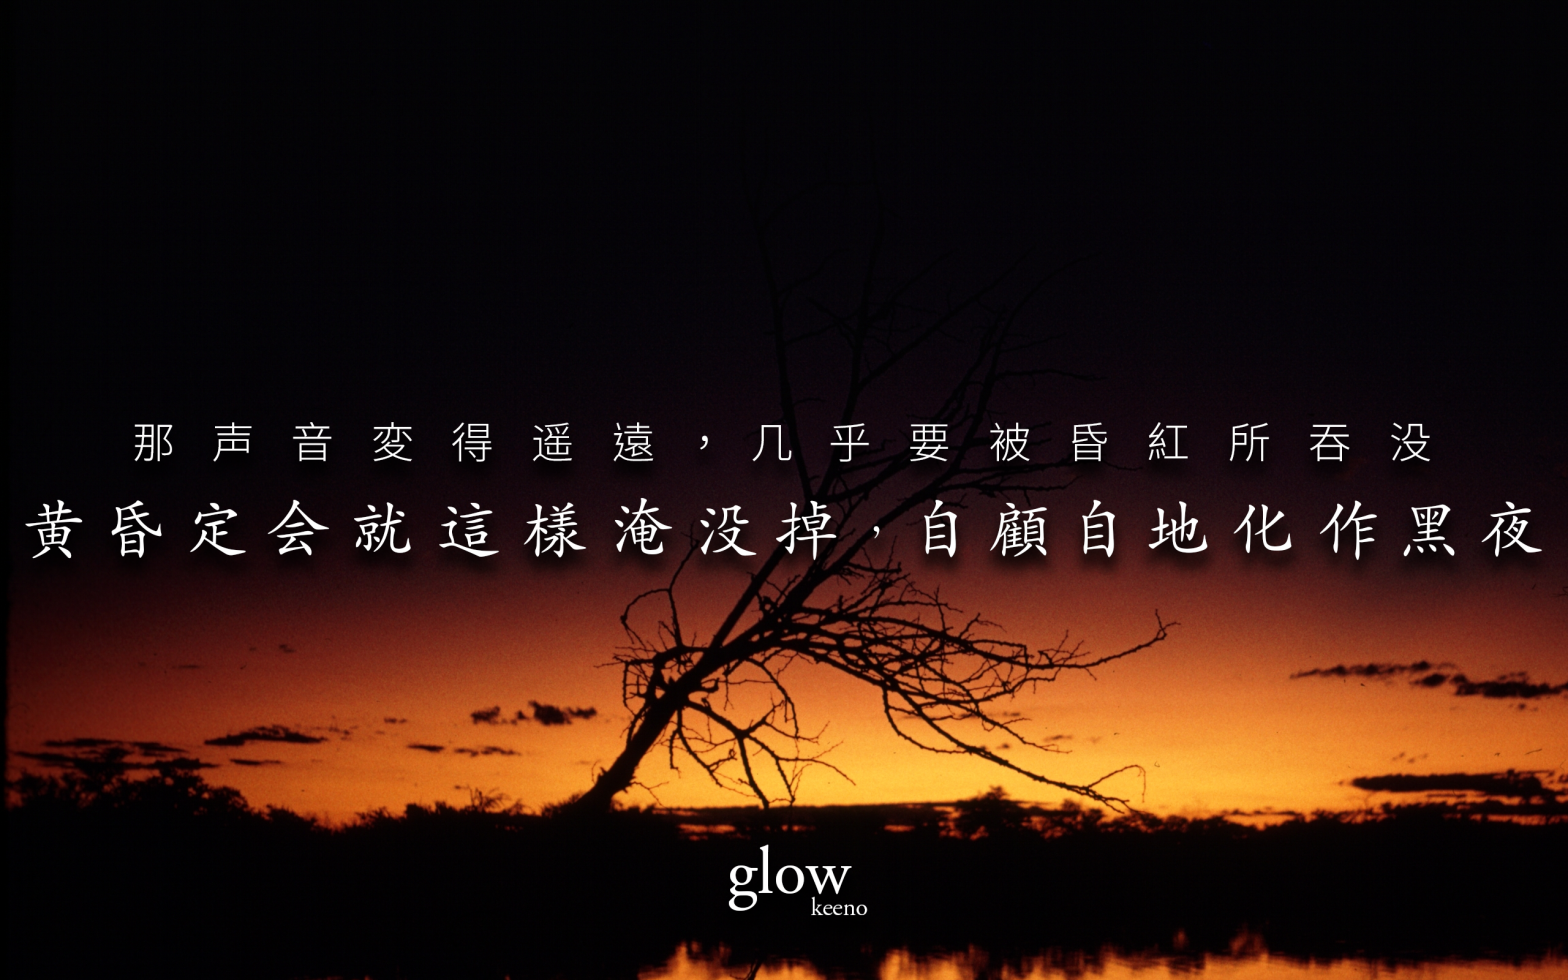 Glow (cn)